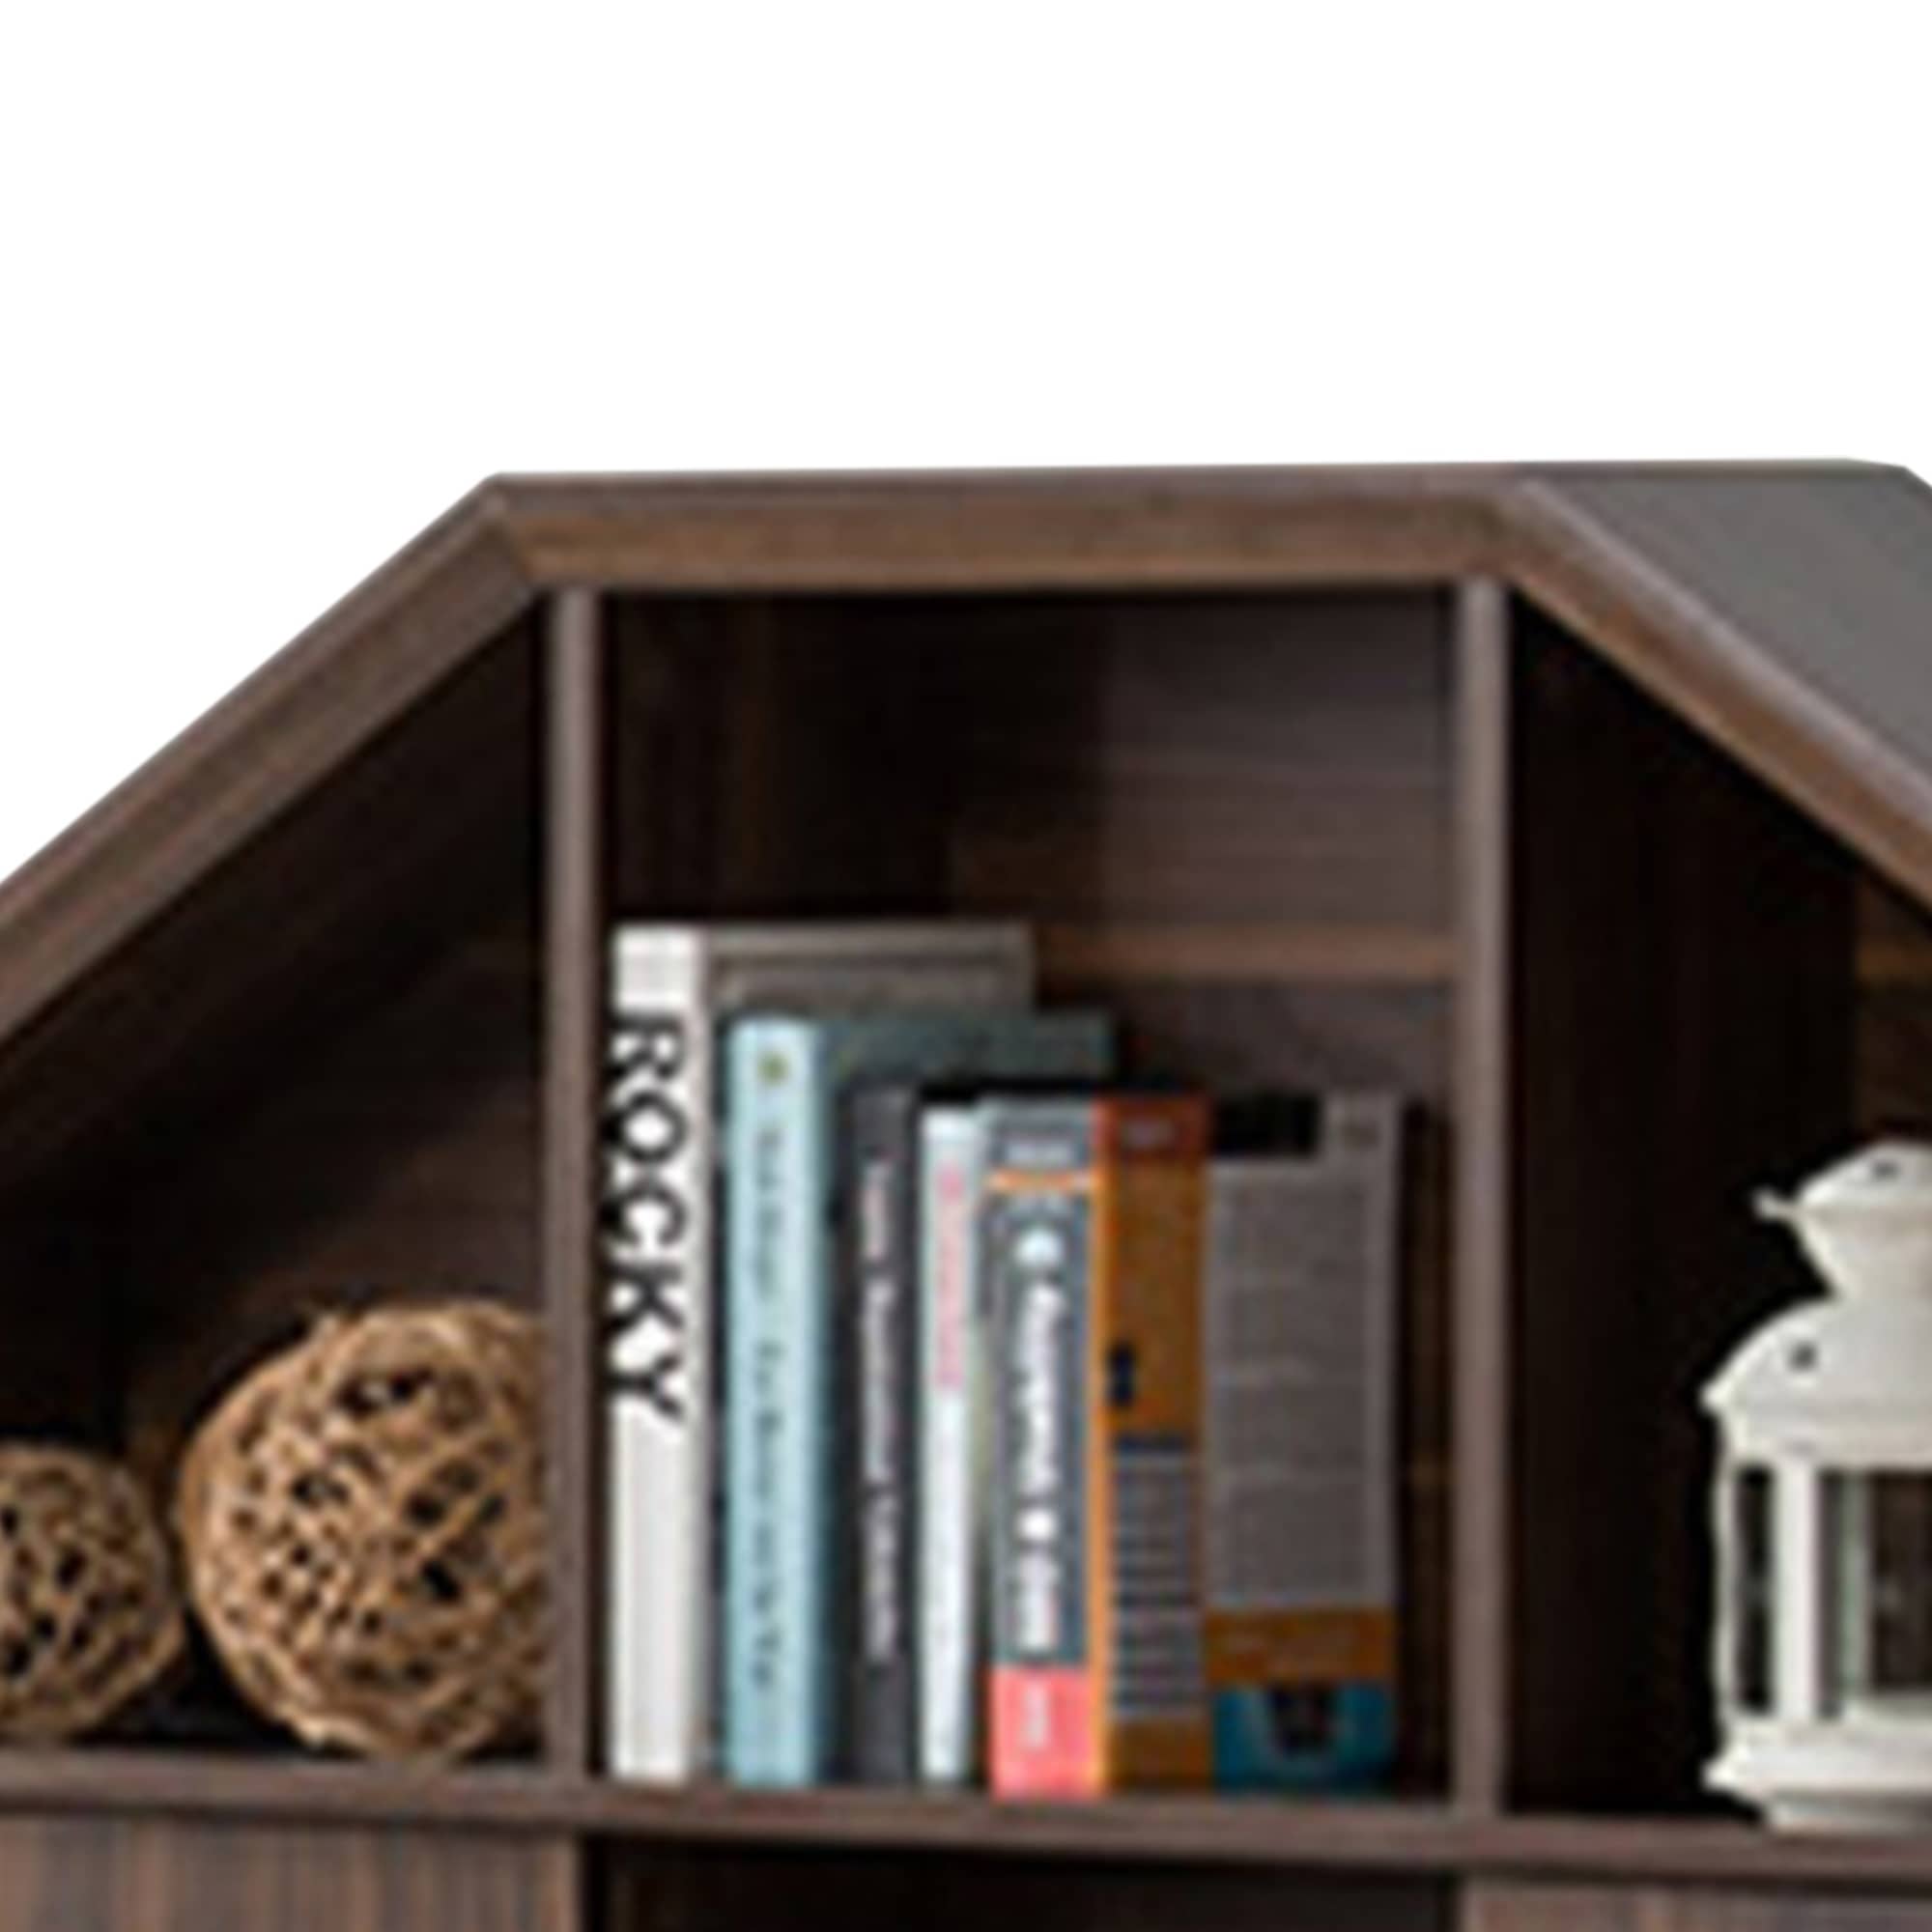 Benzara Twin Size Hut Style Bookcase Headboard In Wood, Dark Walnut Brown - image 4 of 5